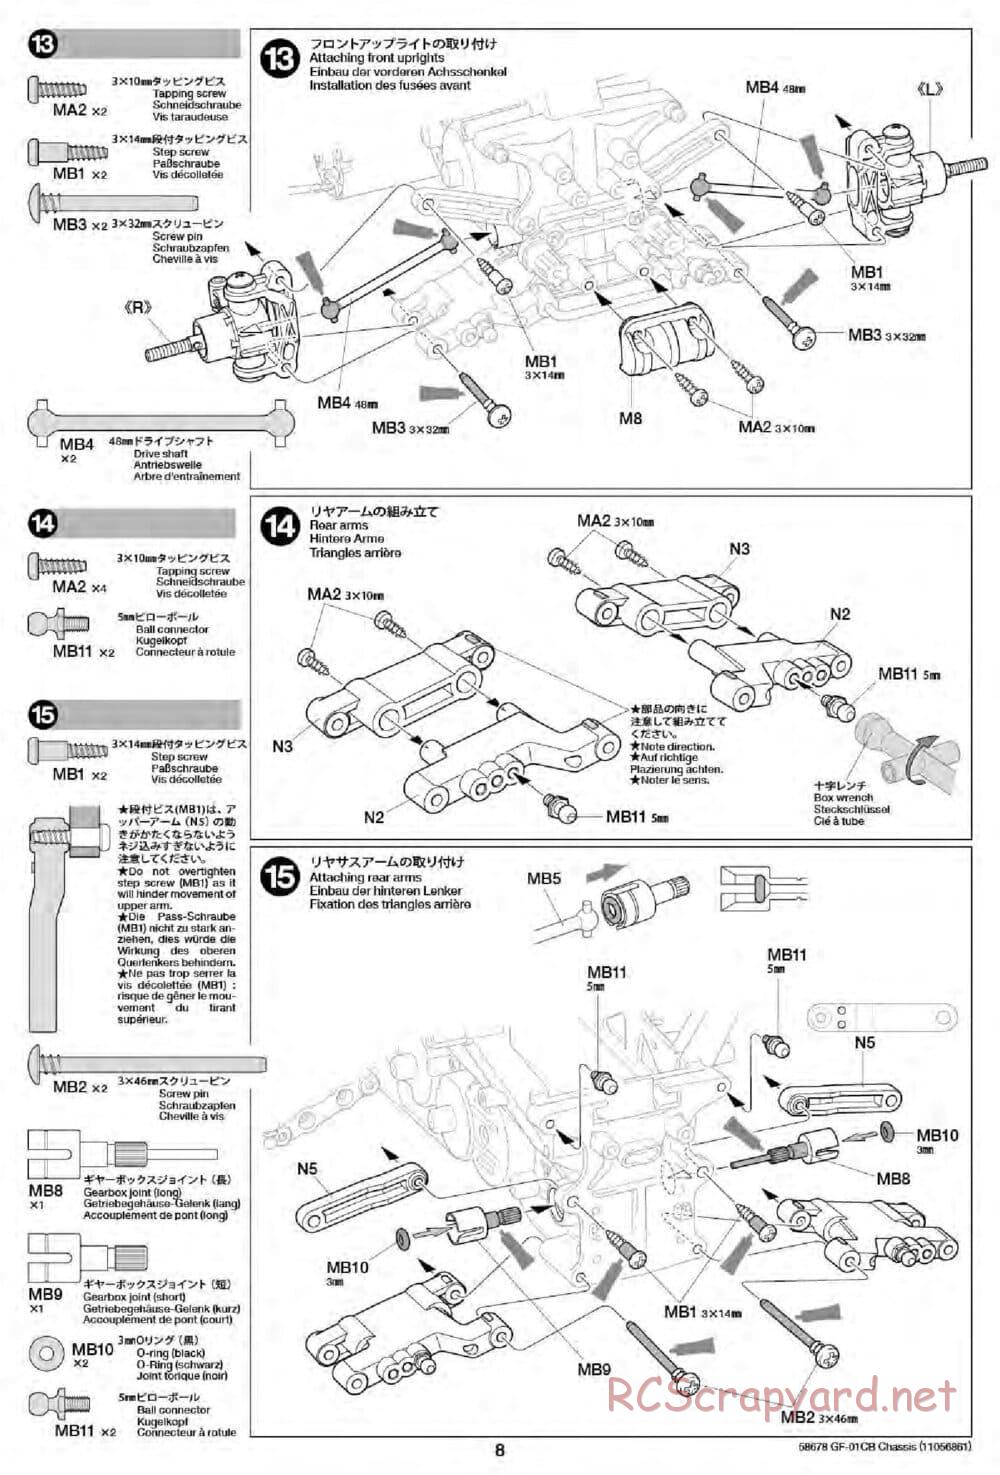 Tamiya - Comical Avante - GF-01CB Chassis - Manual - Page 10